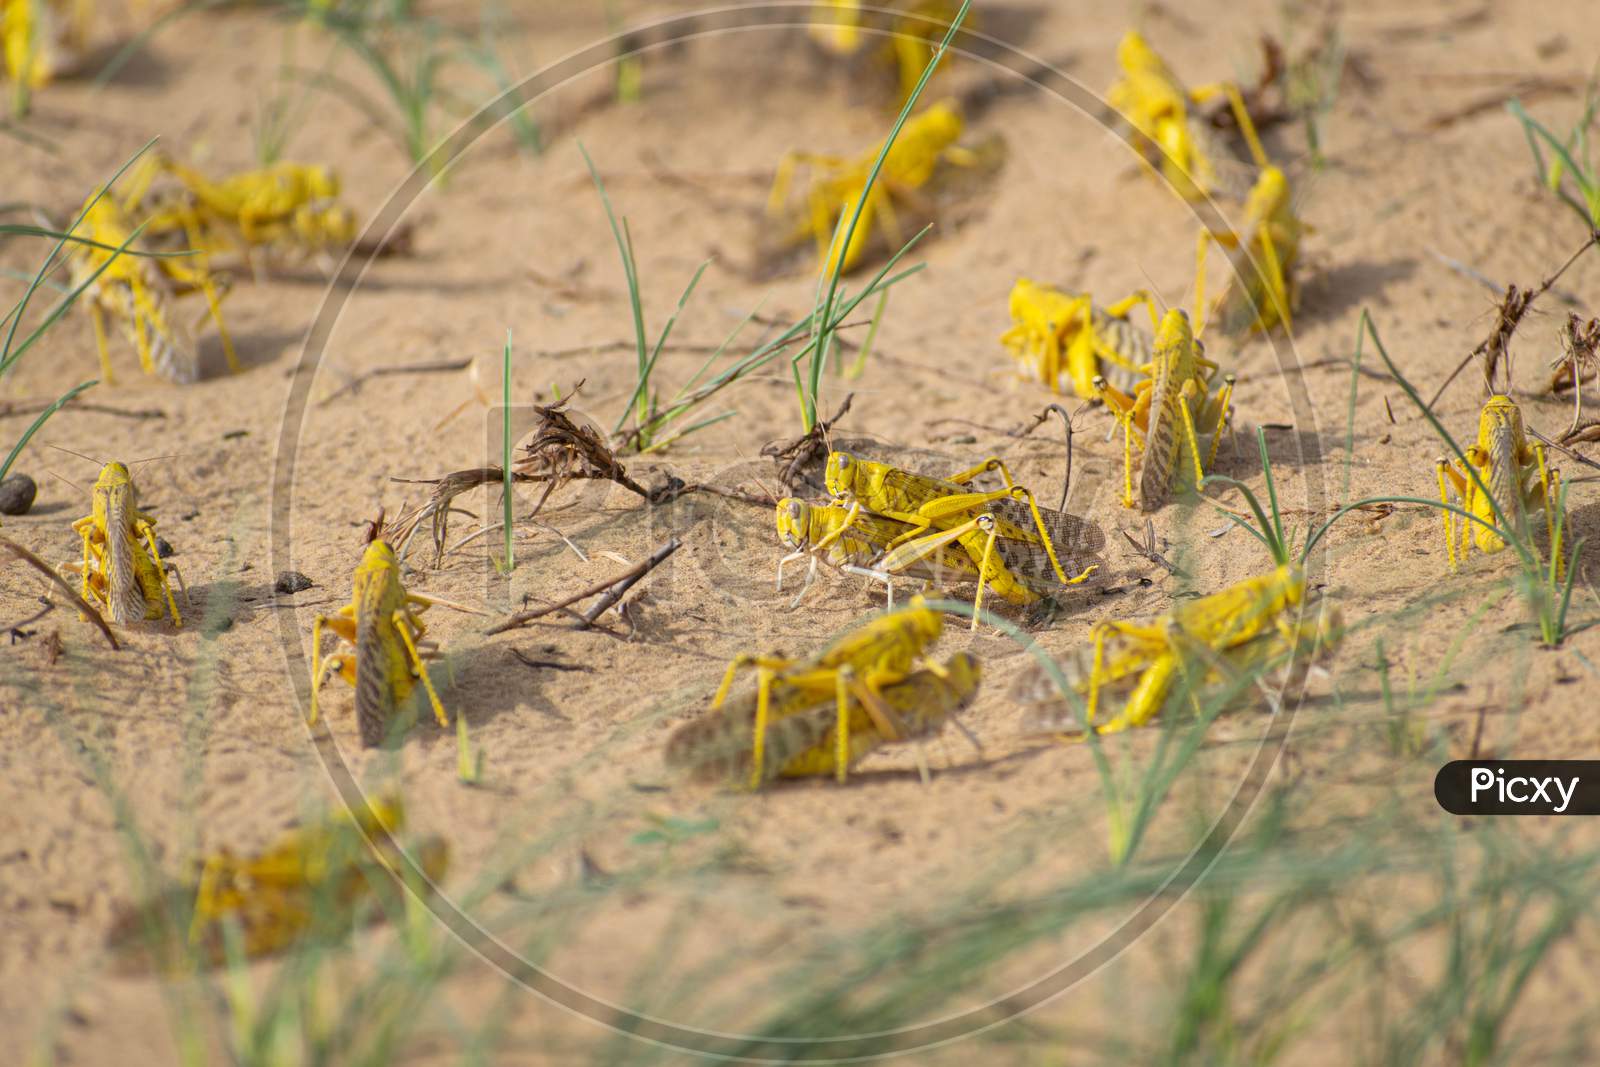 Migratory locust swarm